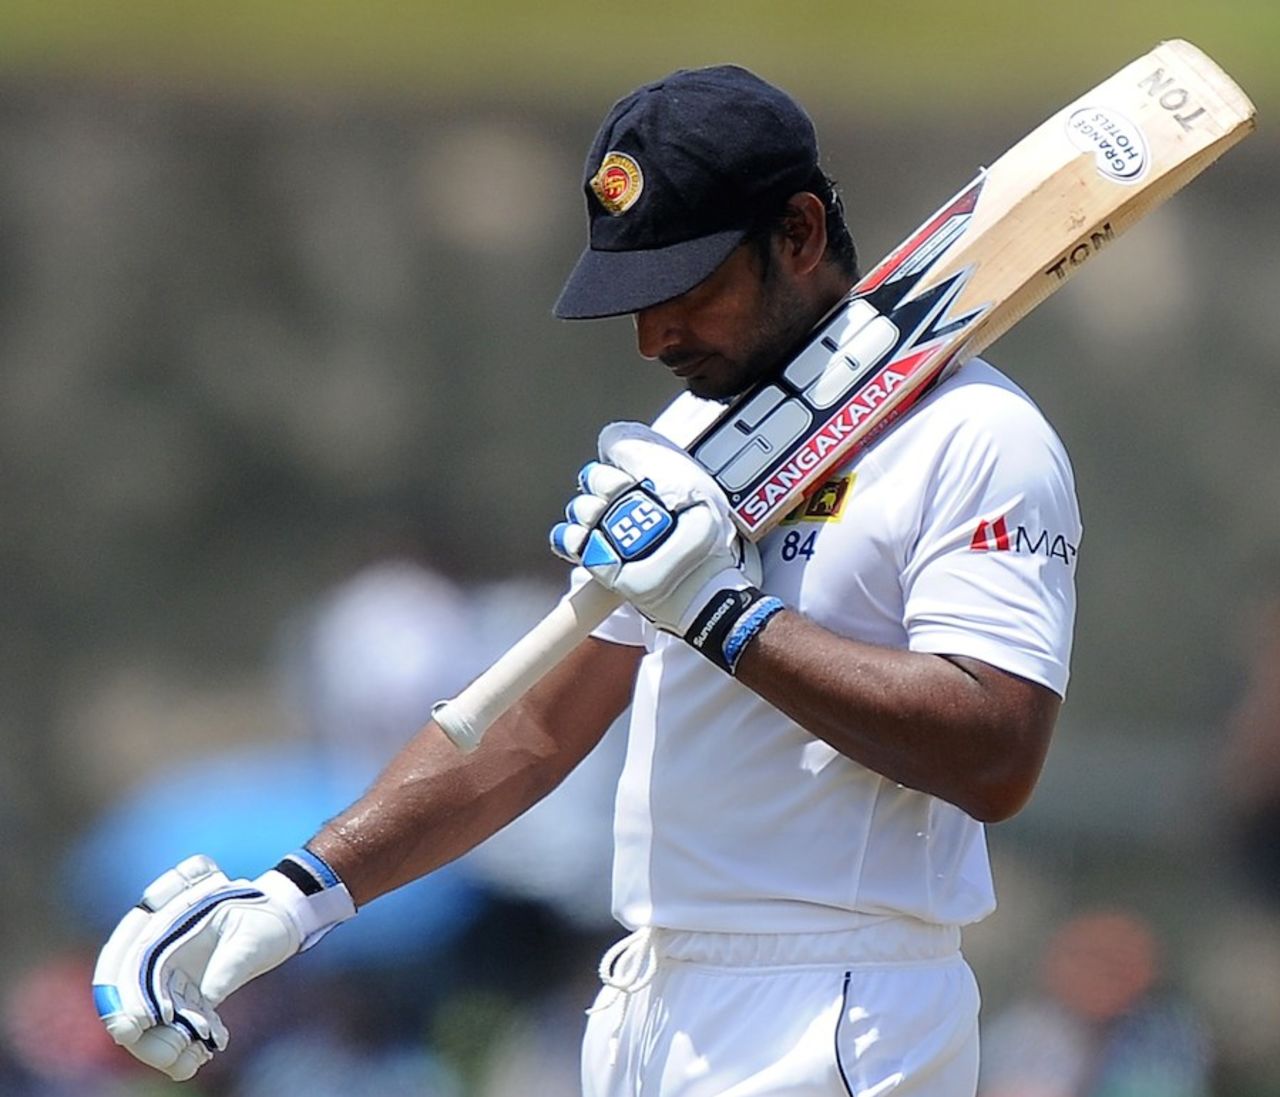 Kumar Sangakkara walks back disappointed, Sri Lanka v South Africa, 1st Test, Galle, 5th day, July 20, 2014